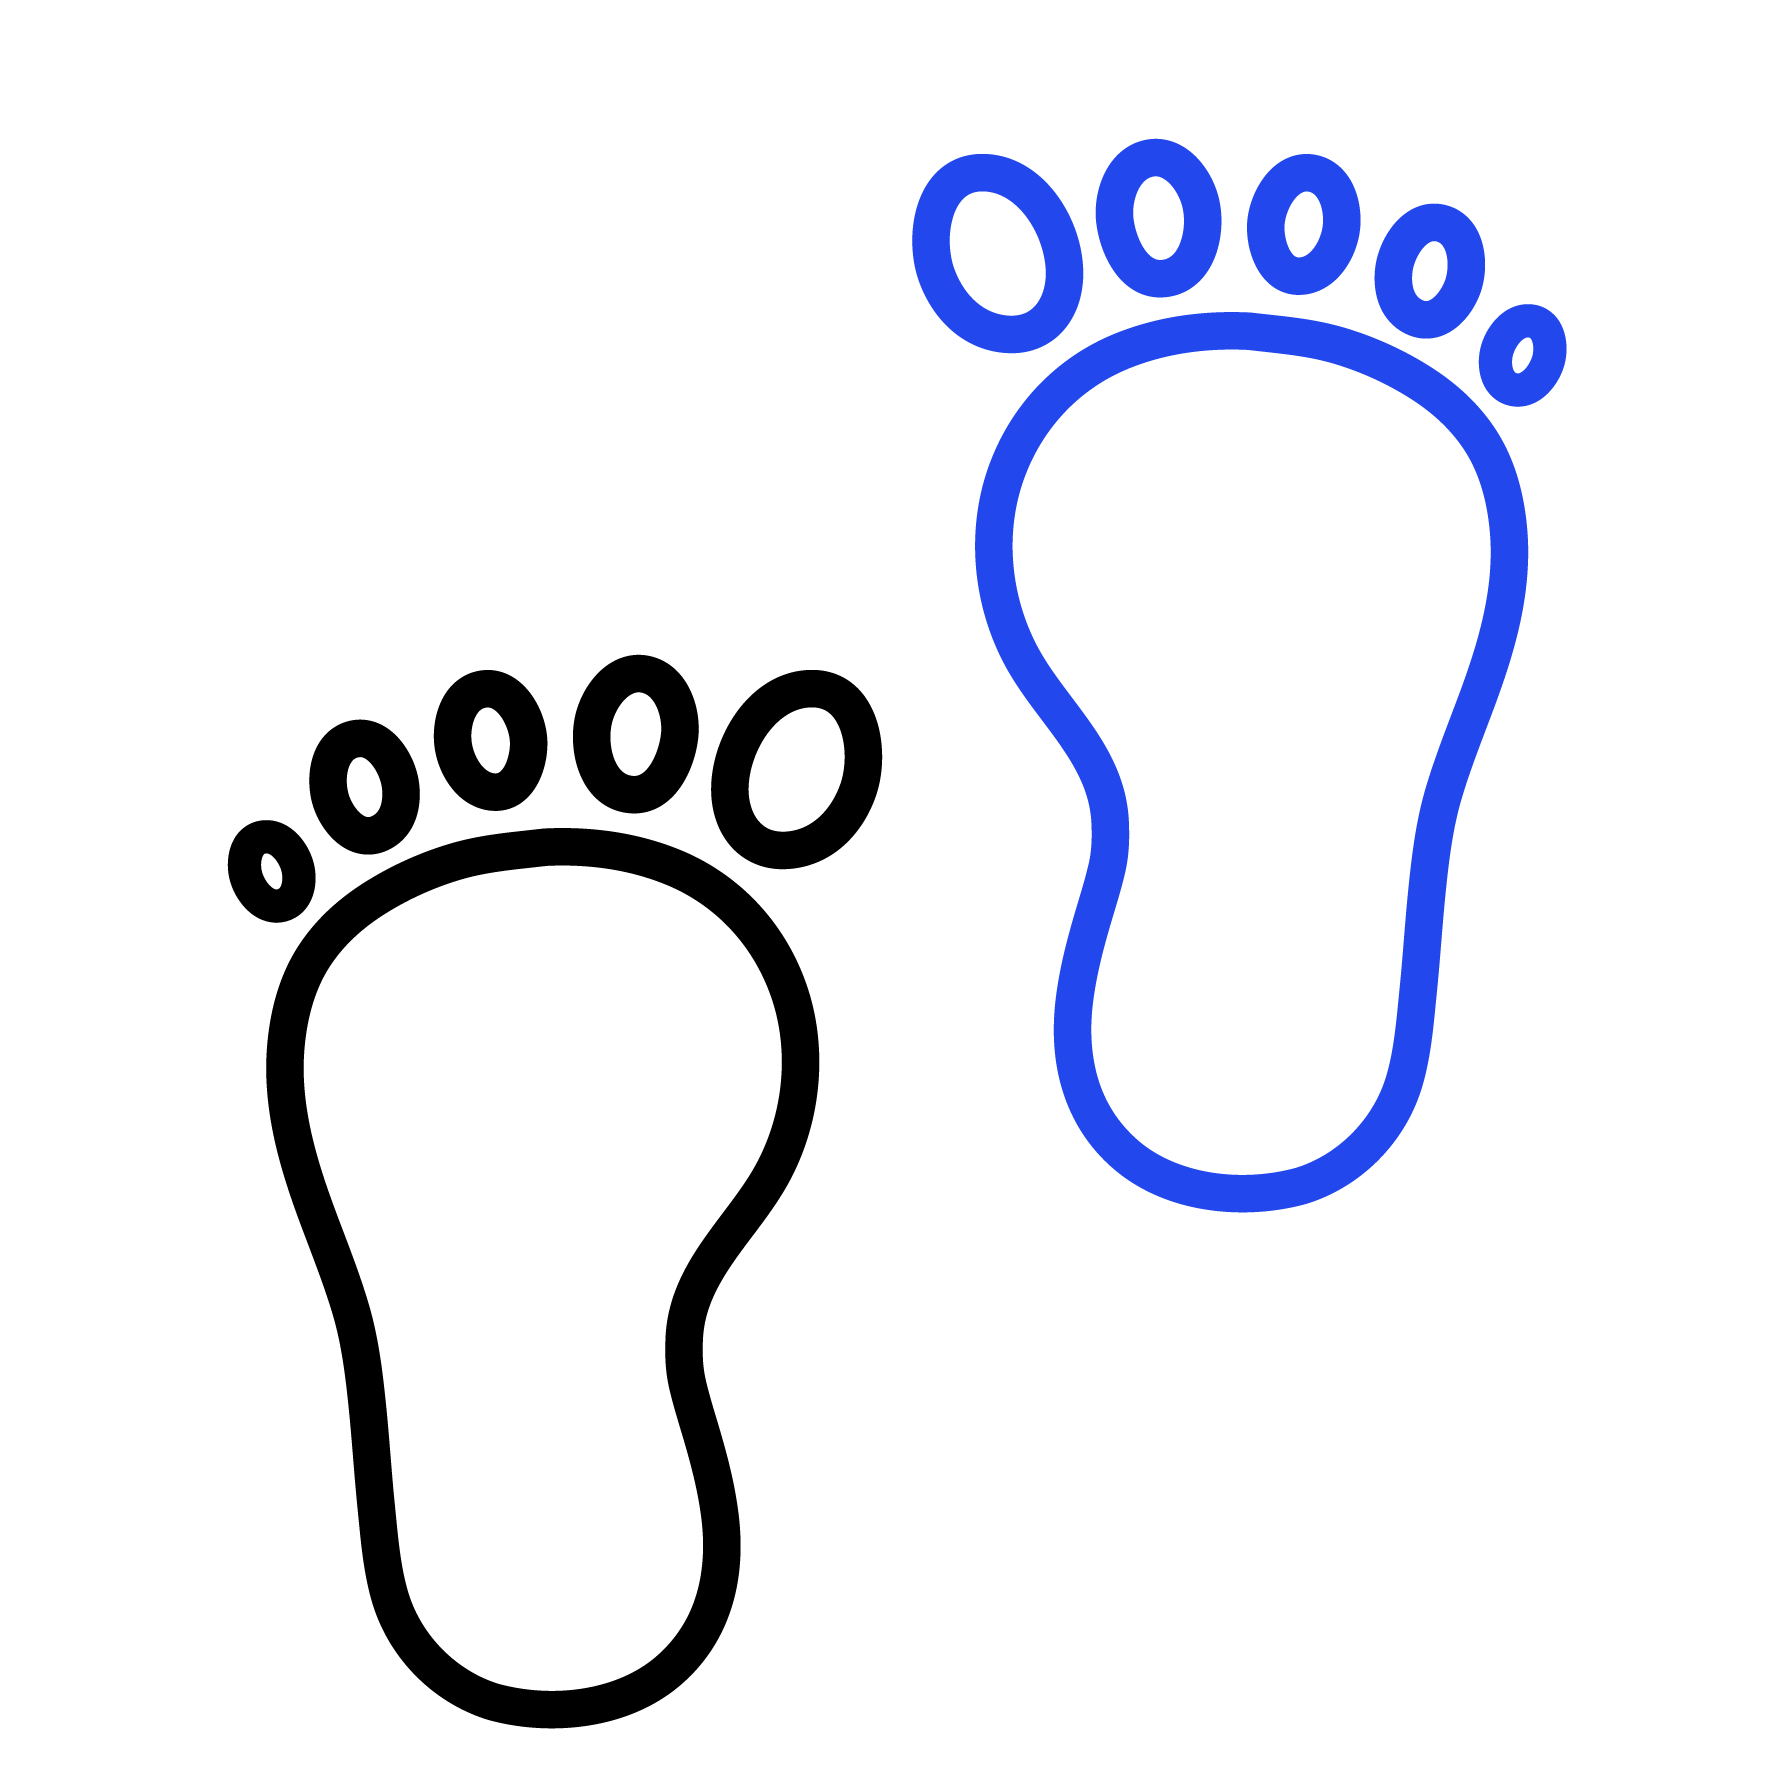 Foot prints - icon